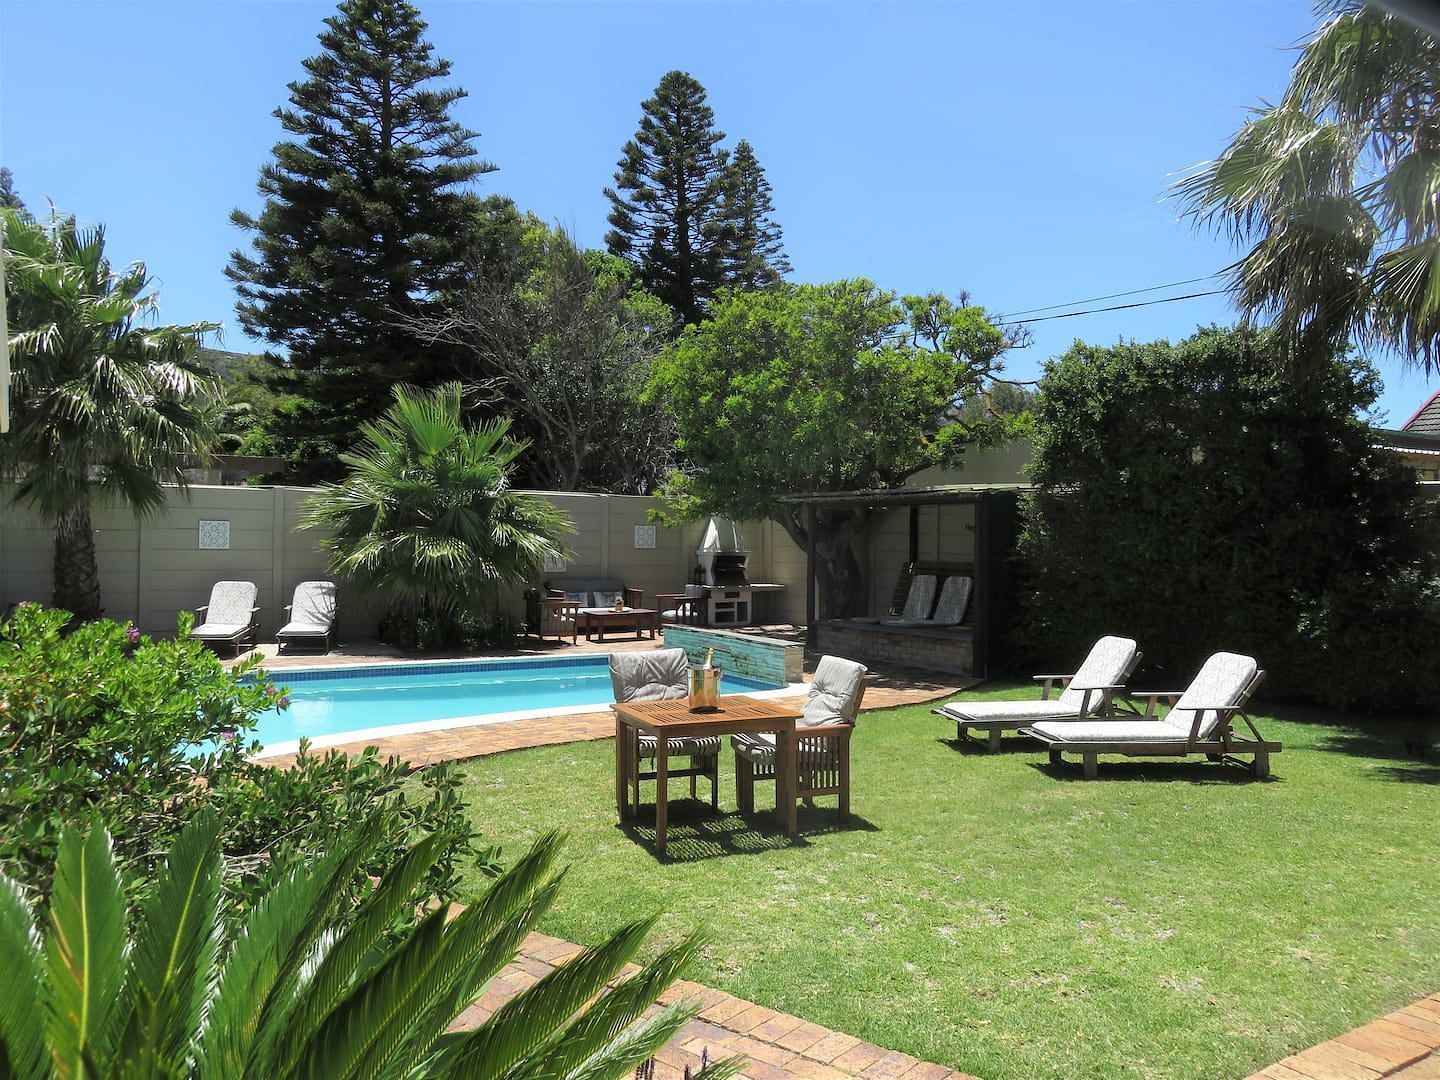 JWguest Residential Home at Cape Town, Western Cape | Wonderful Studio Apartment between 2 Oceans #1 | Jwbnb no brobnb 17